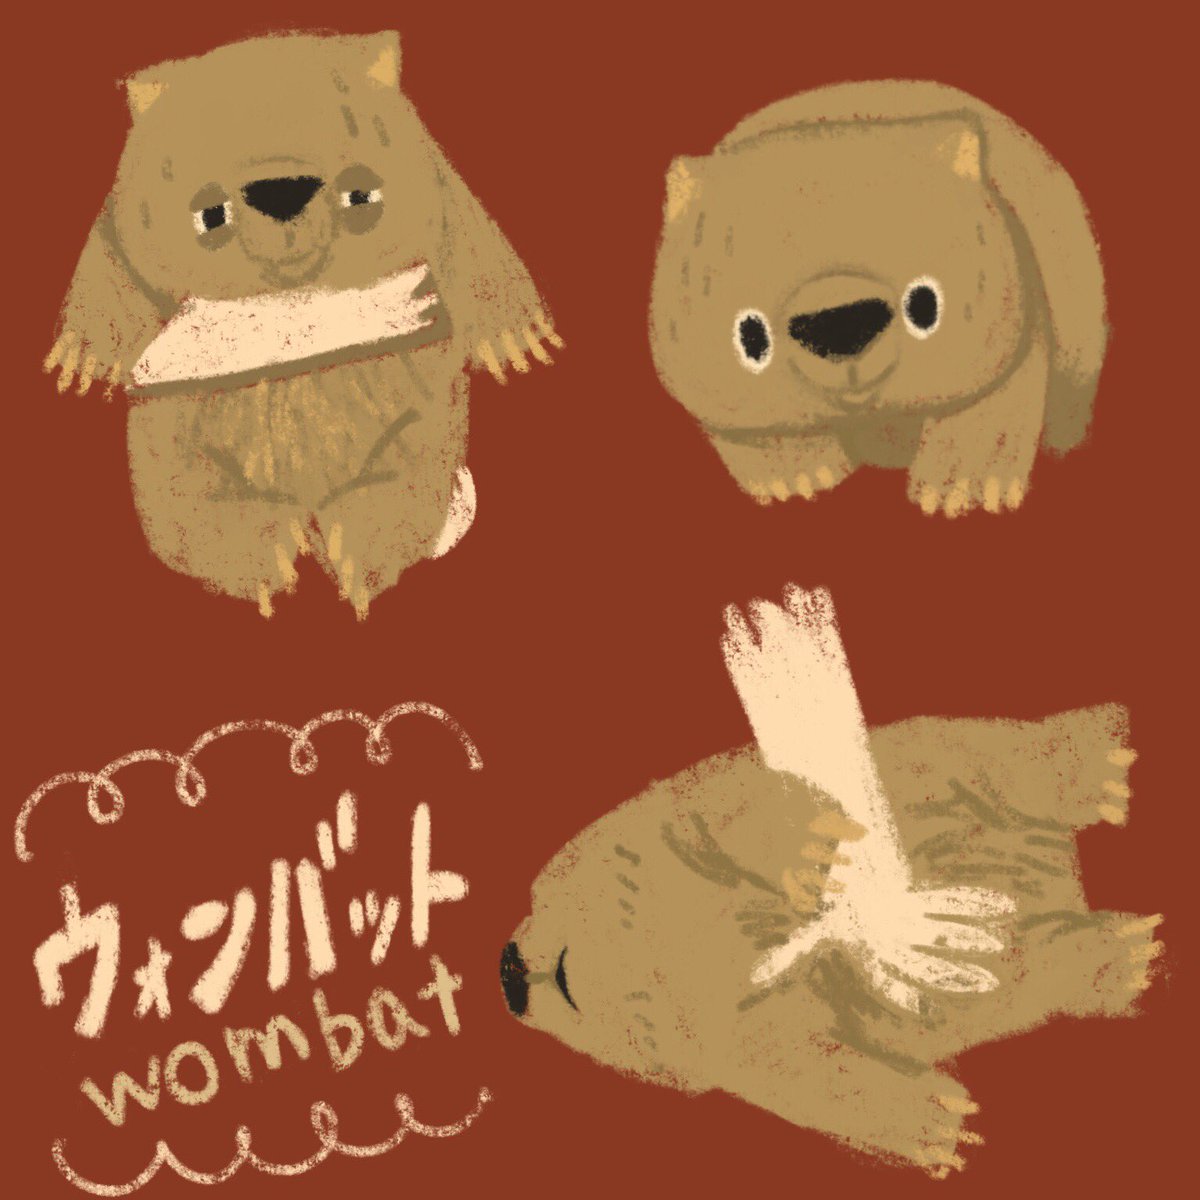 Jerky 甘えてるウォンバットは何回見てもかわいいなあ Illust Illustration Art Vombatidae Wombat イラスト ウォンバット